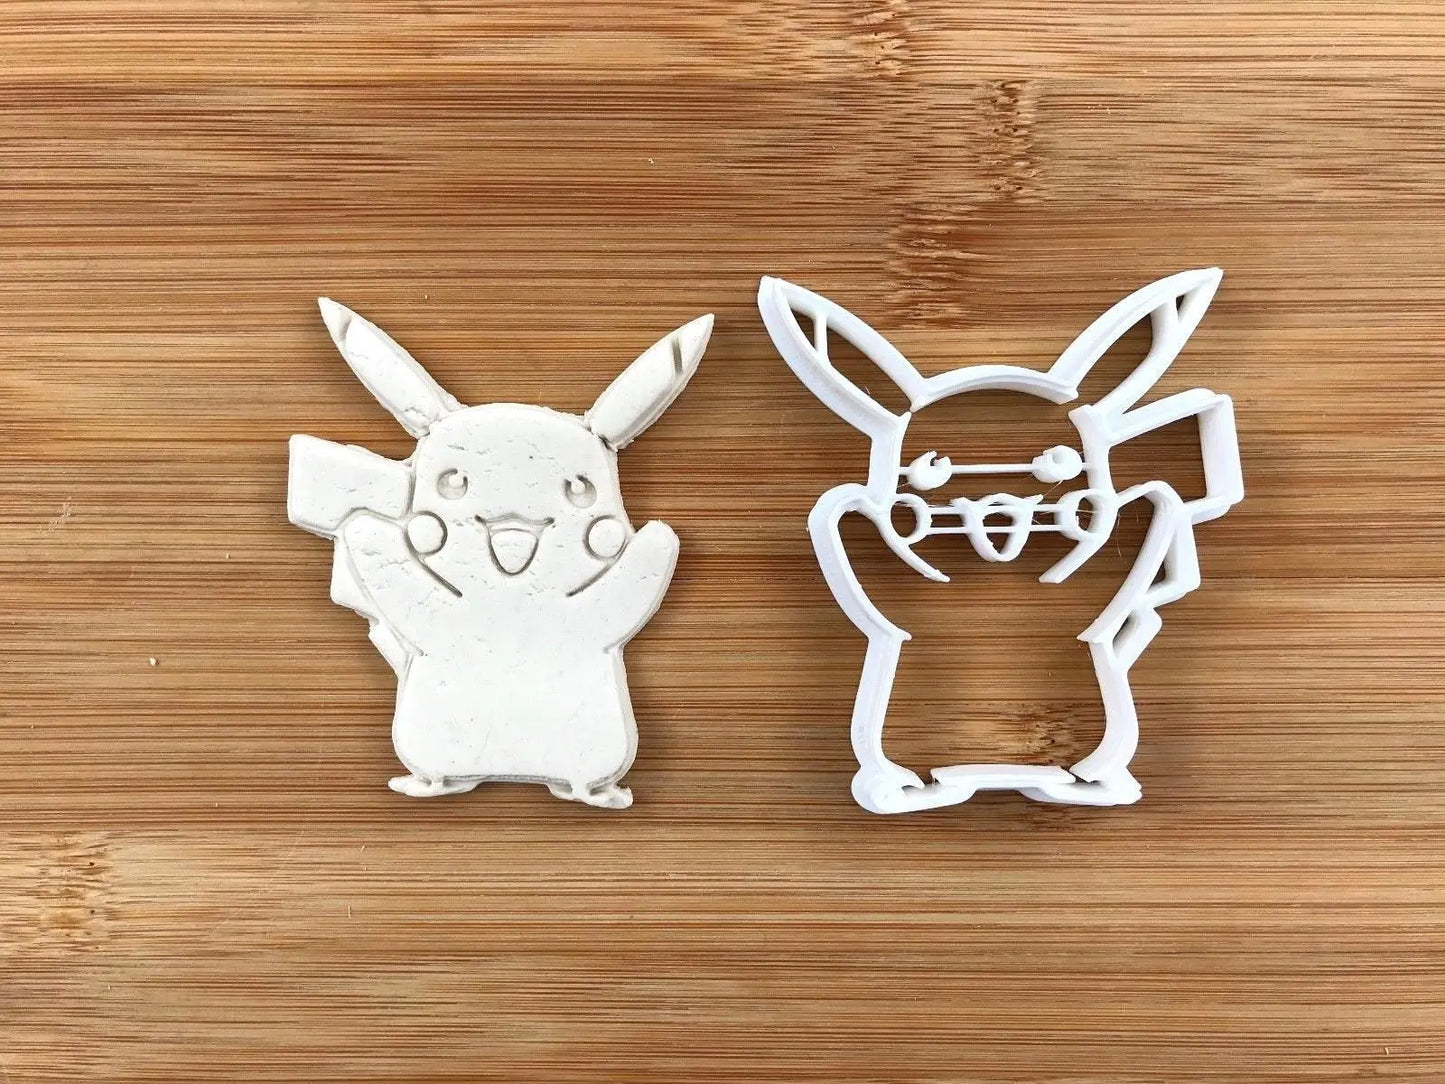 Pikachu Pokemon 001 Cookie Cutter Fondant Cake Decorating Mold gum paste MEG cookie cutters